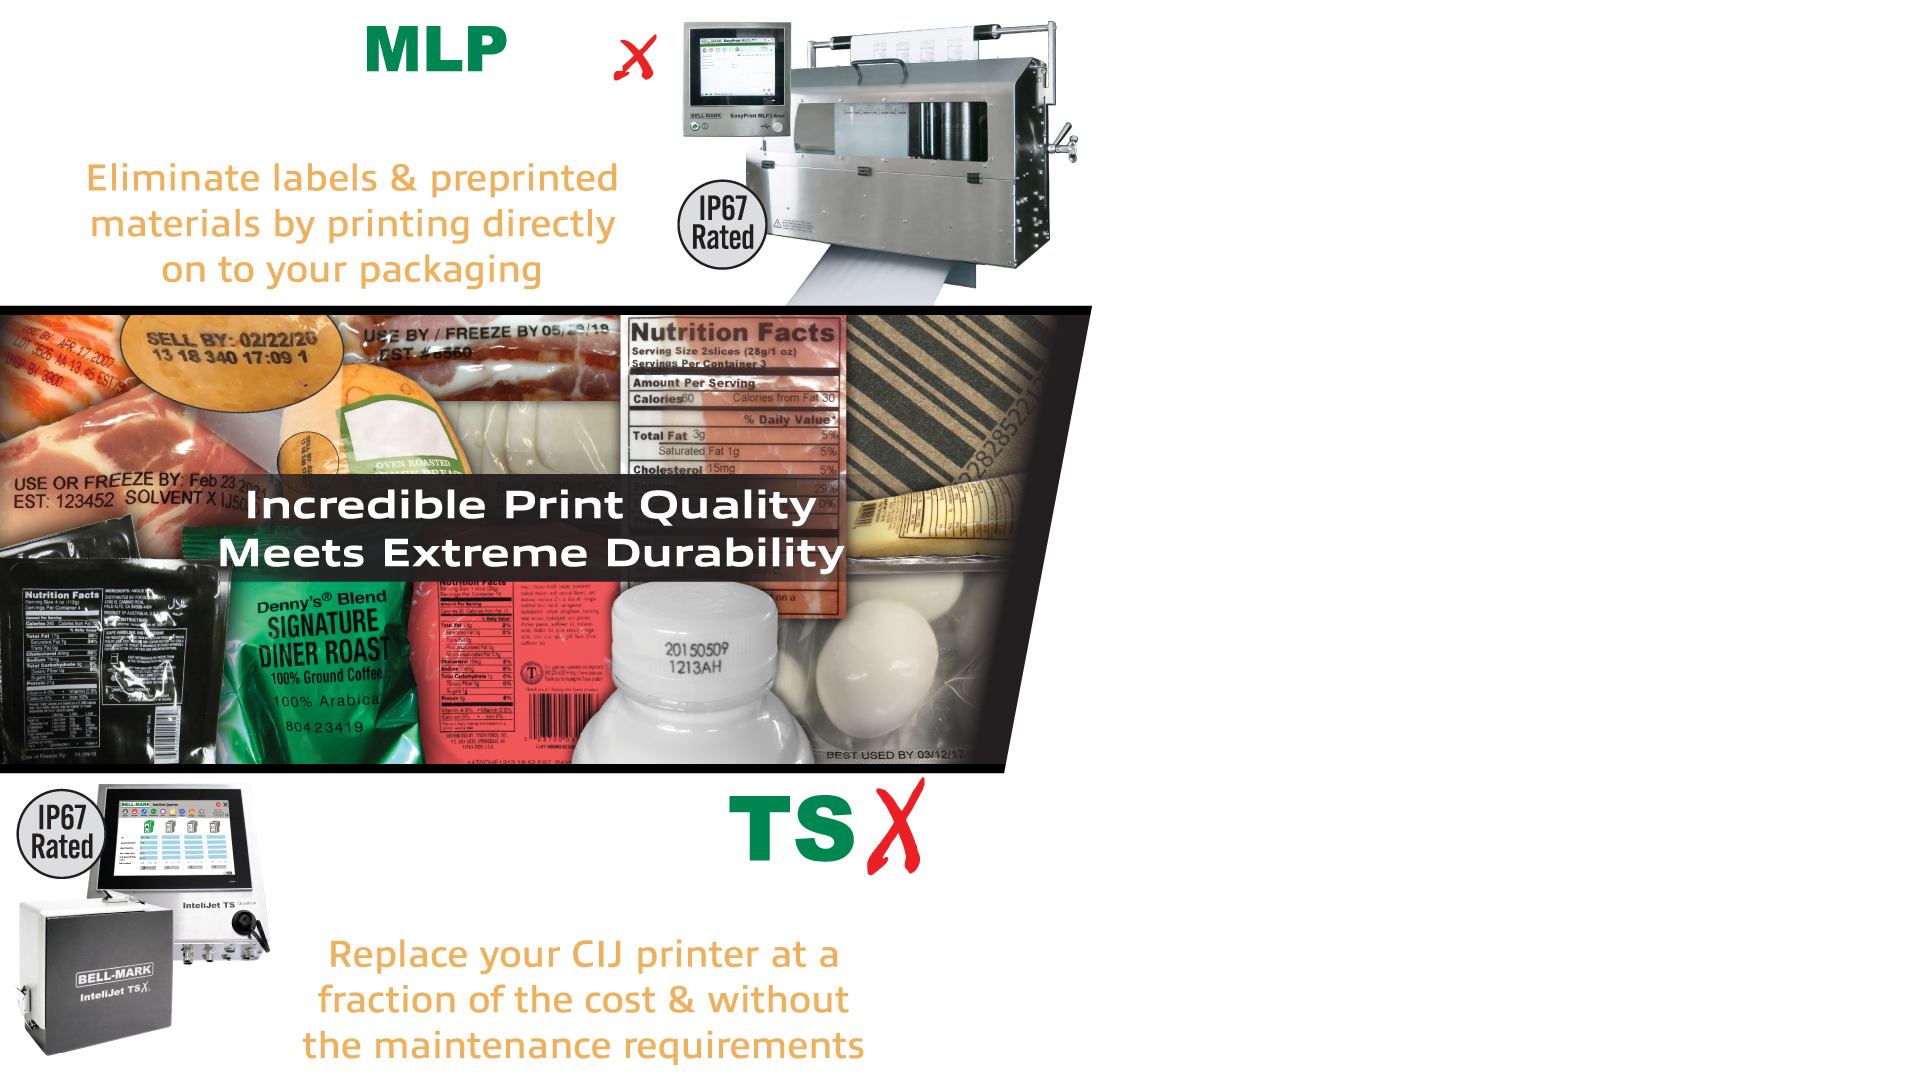 InteliJet TSX / EasyPrint MLP Apex - Incredible print quality meets extreme durability